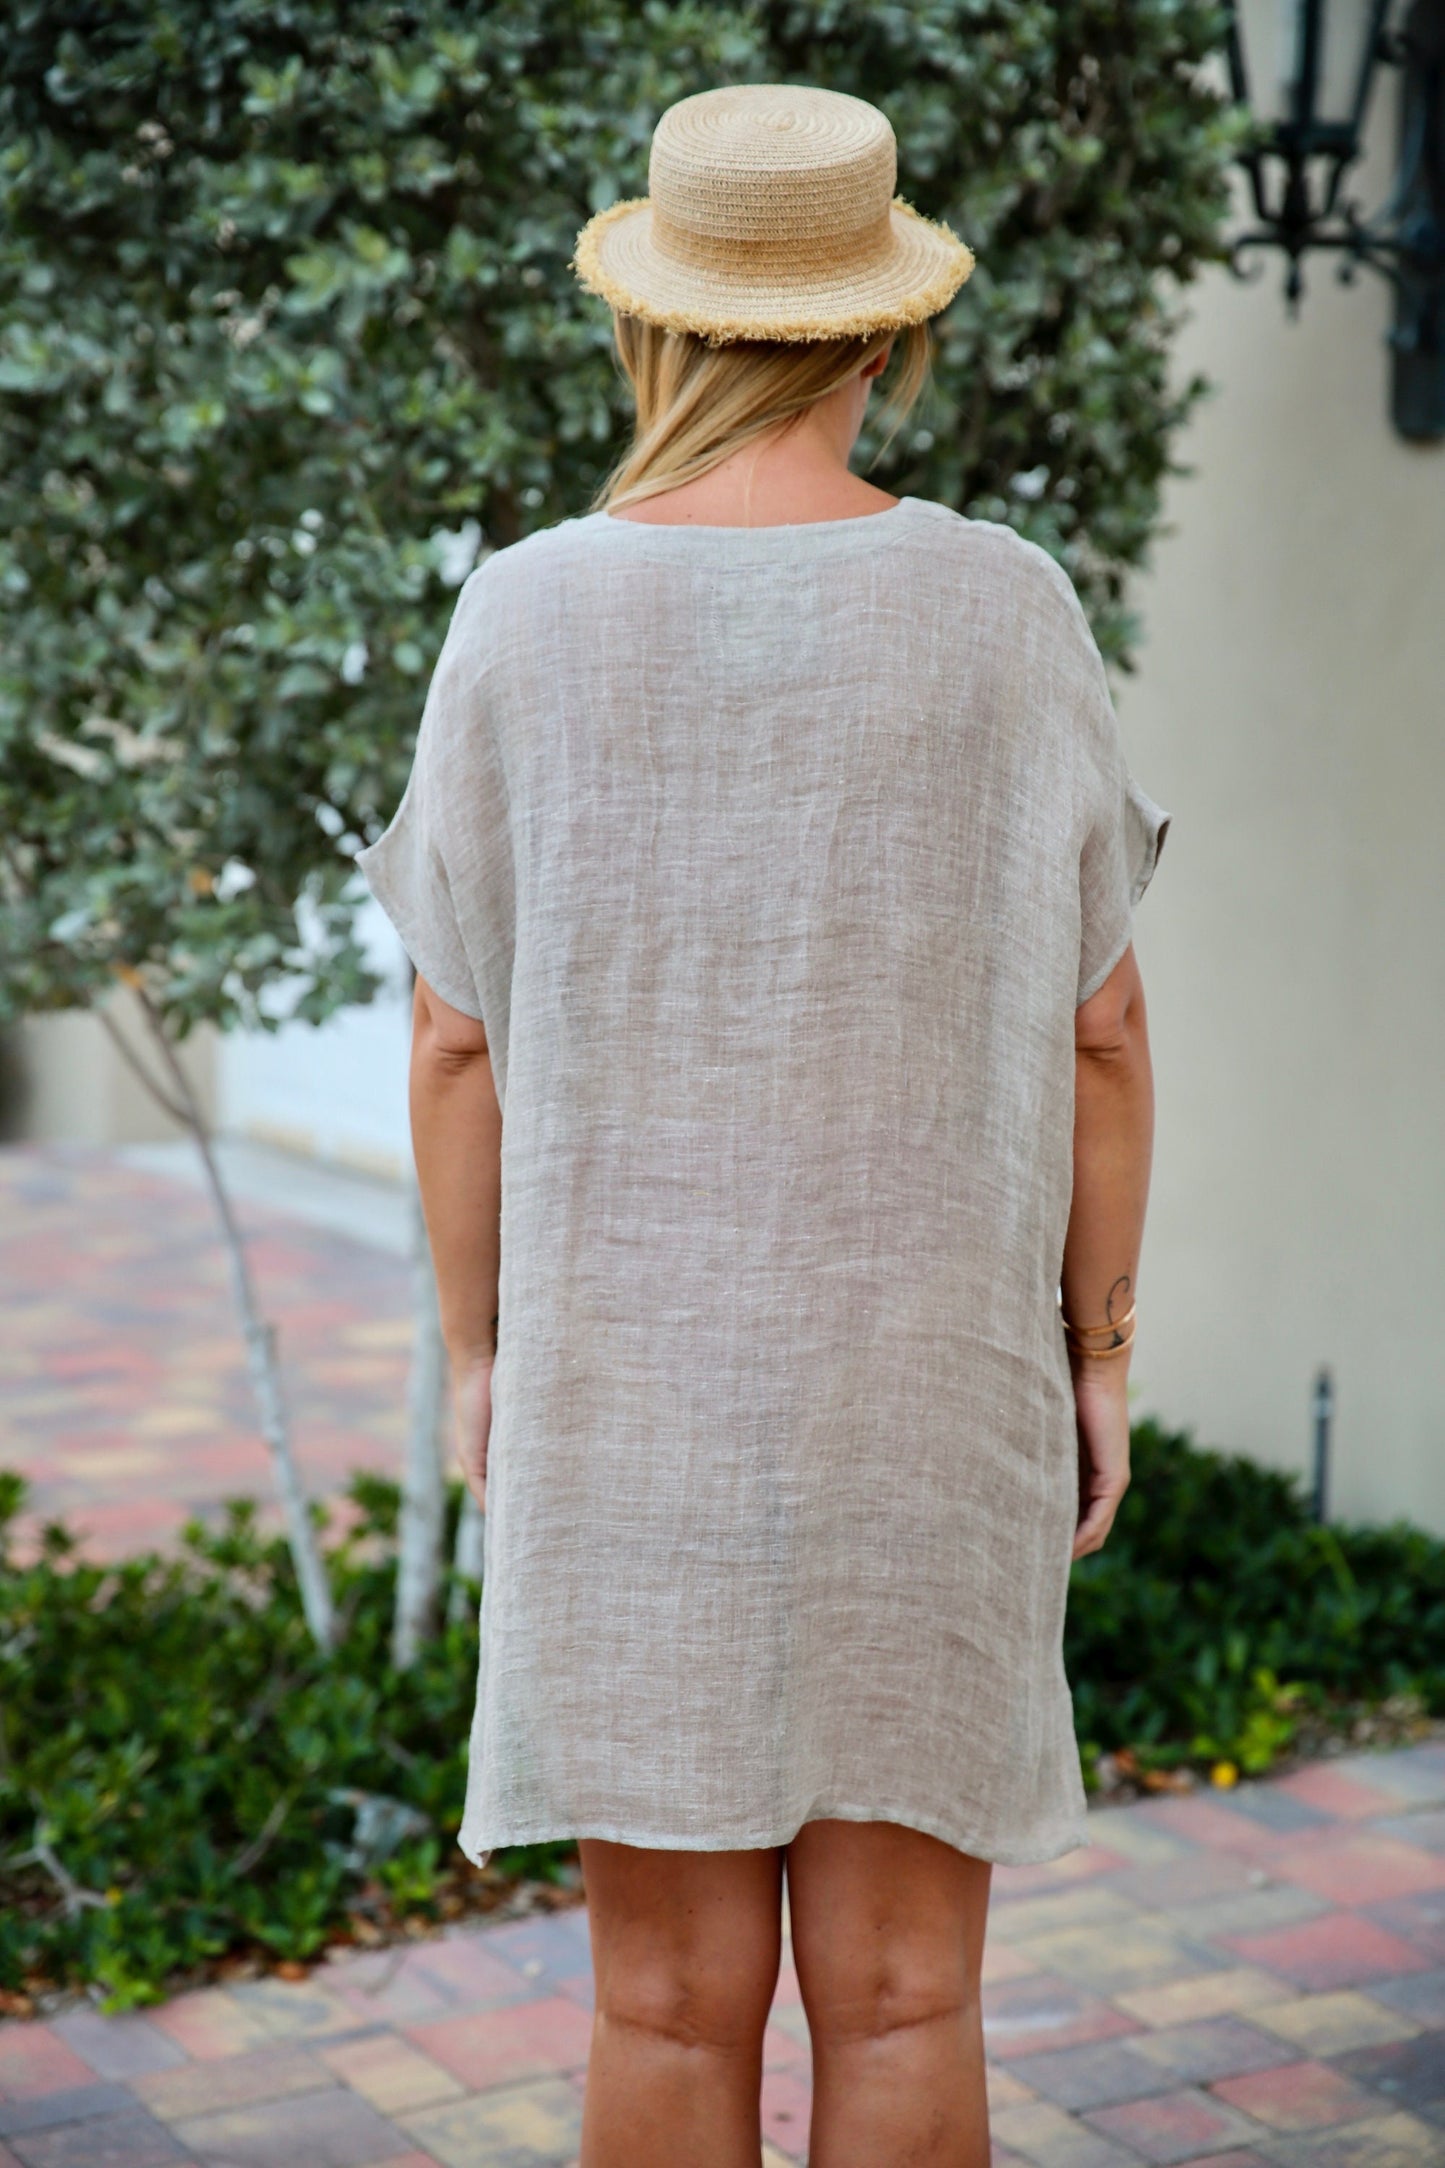 Linen Sheer( Gauze) Cover Up | V-Neck Sheer Loose Linen Tunic Top | Linen Sheer Beach Dress